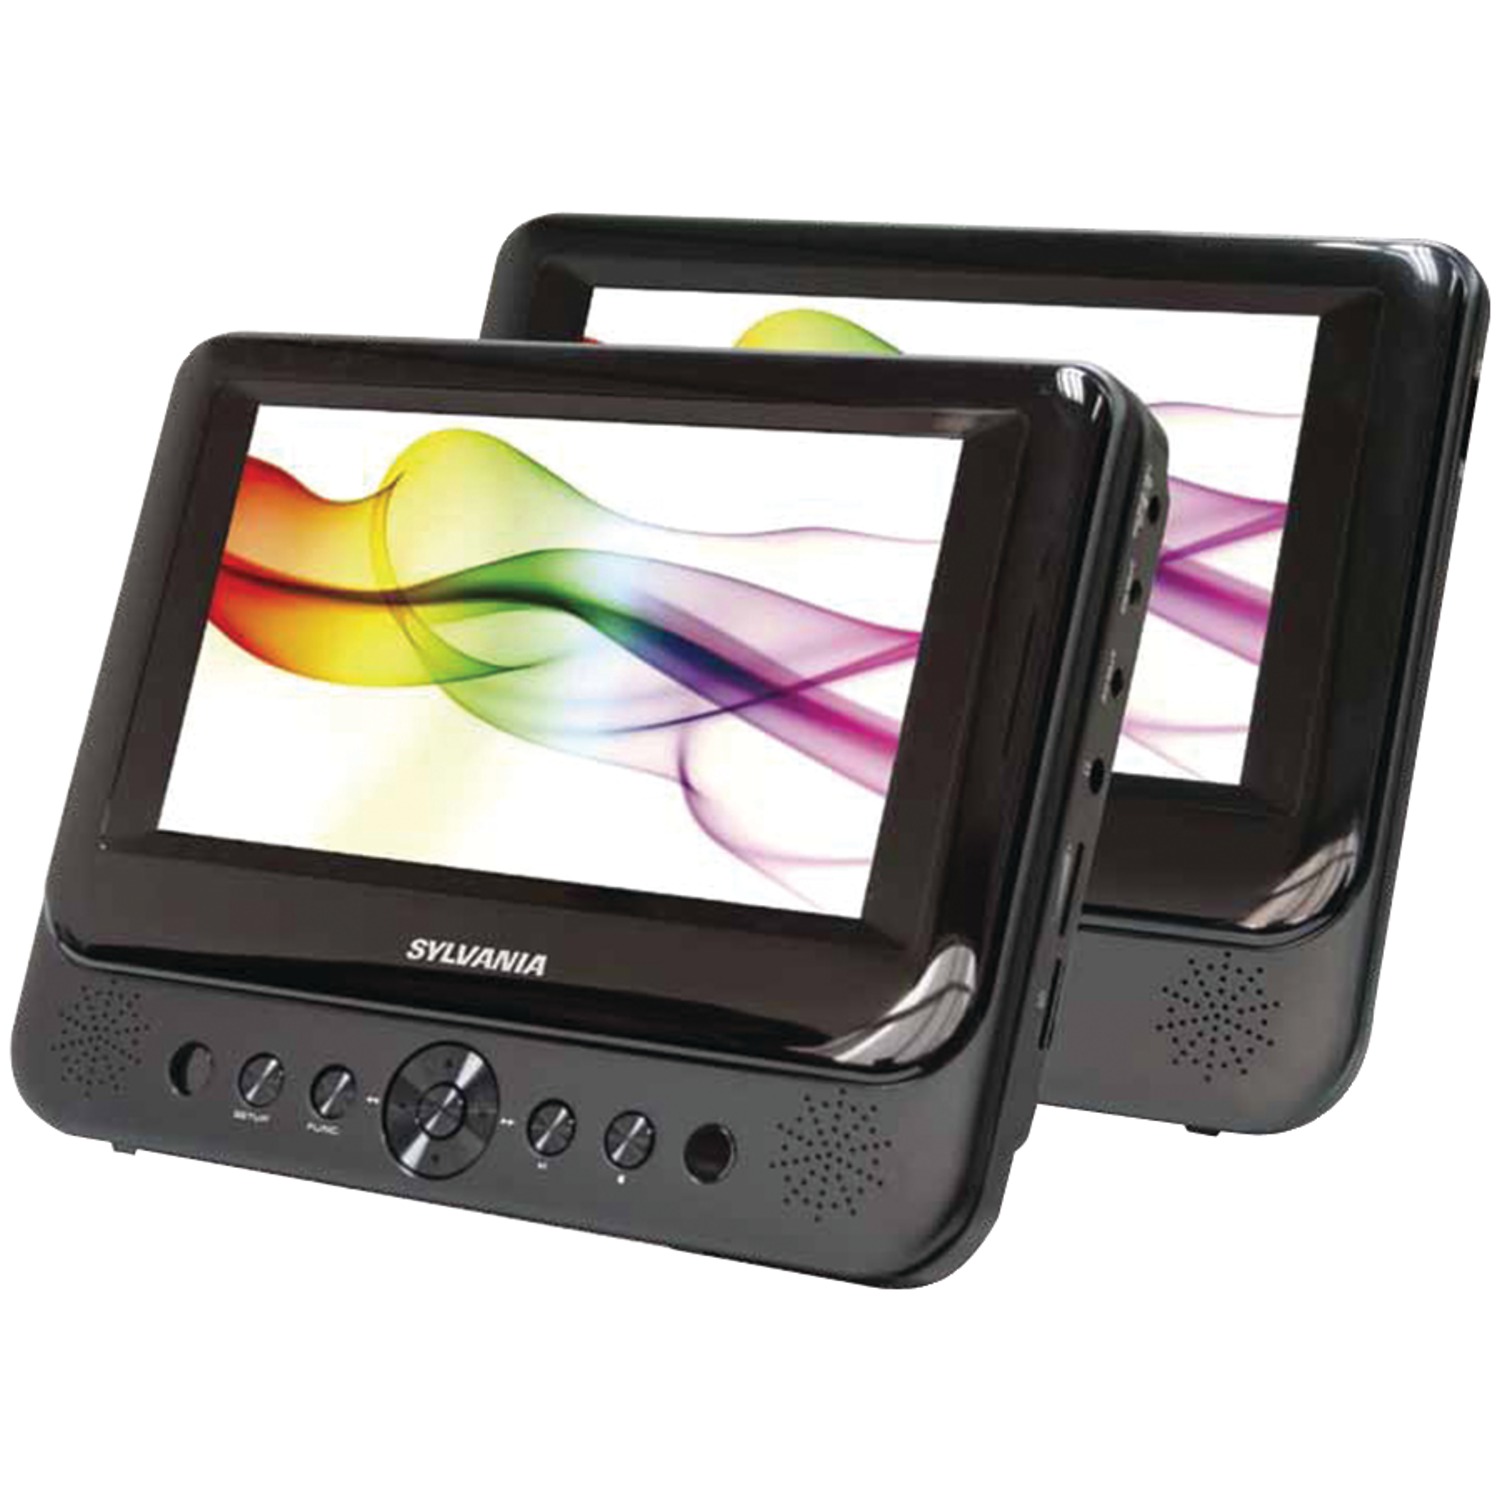 Sylvania 7" Dual-screen Portable Dvd Player (Sdvd8739) - image 1 of 2